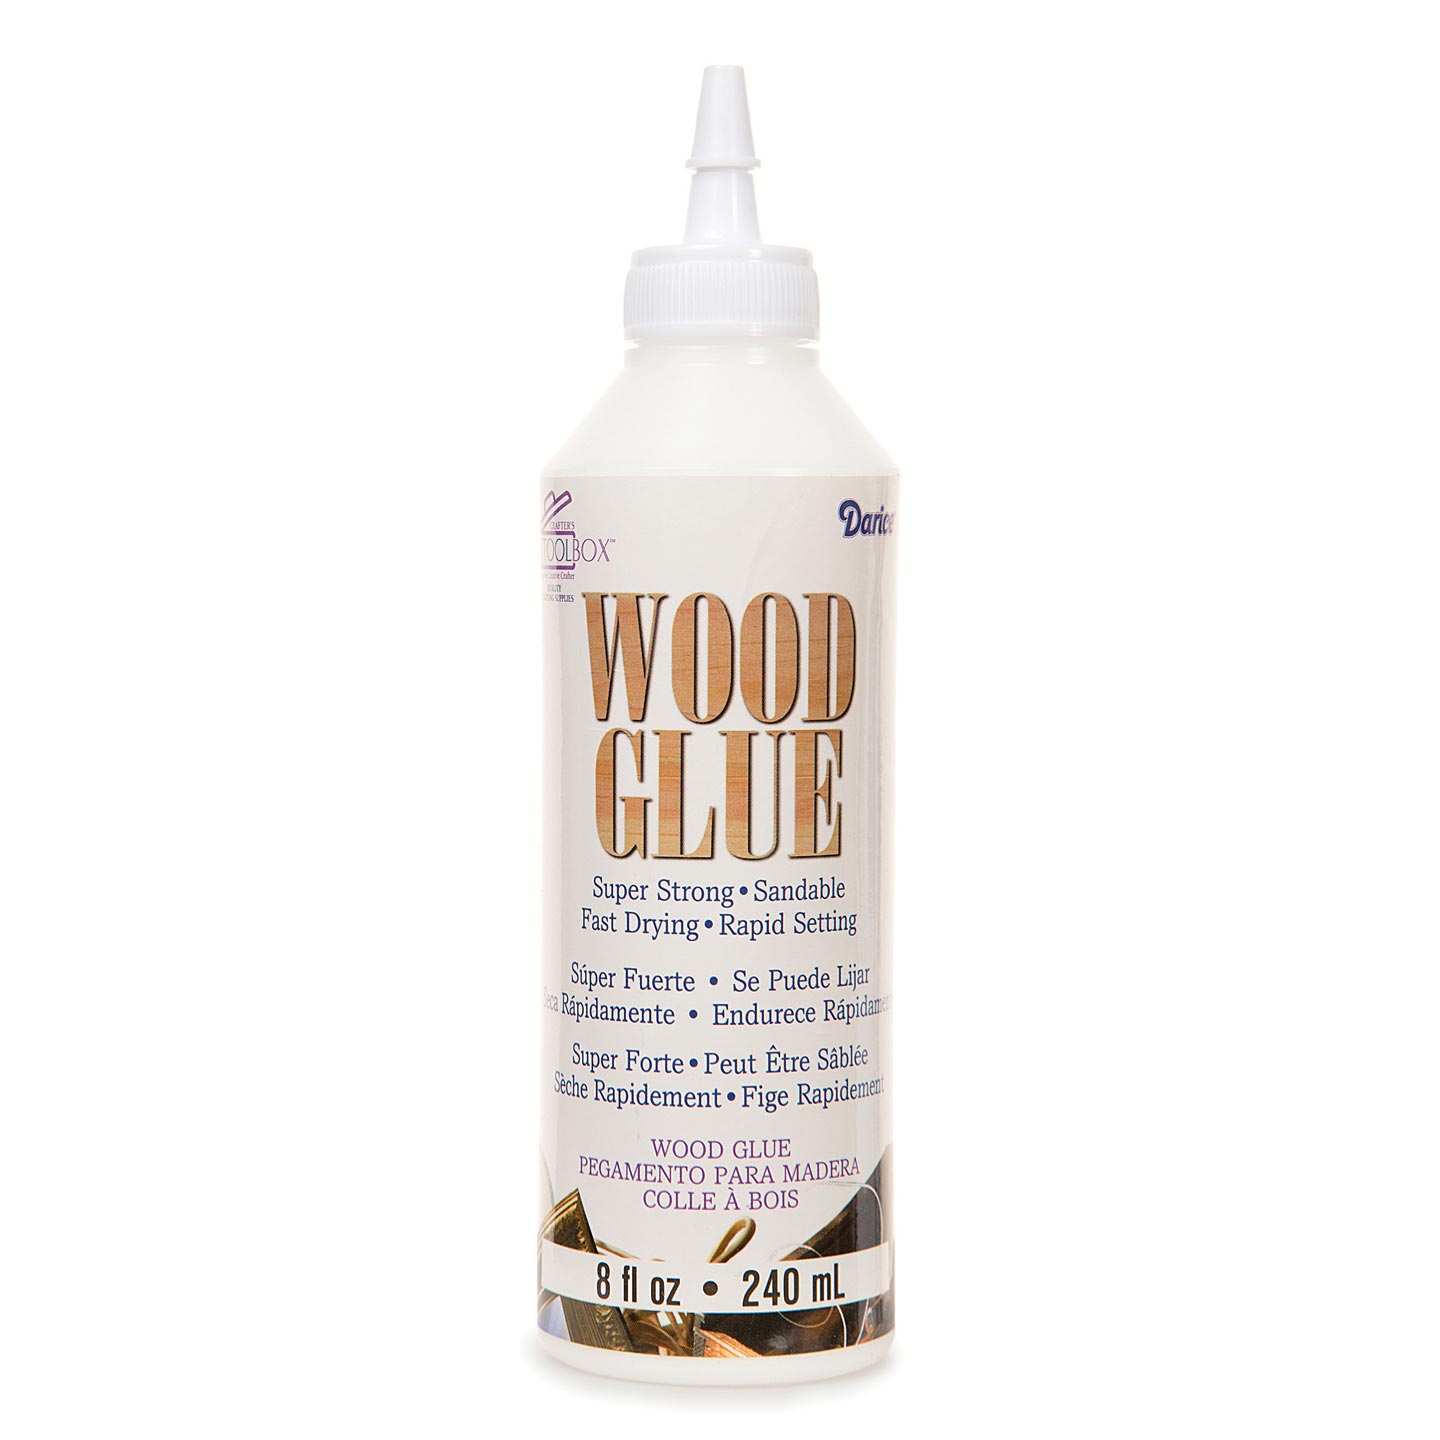 Darice Craft Wood Glue: 8 oz bottle